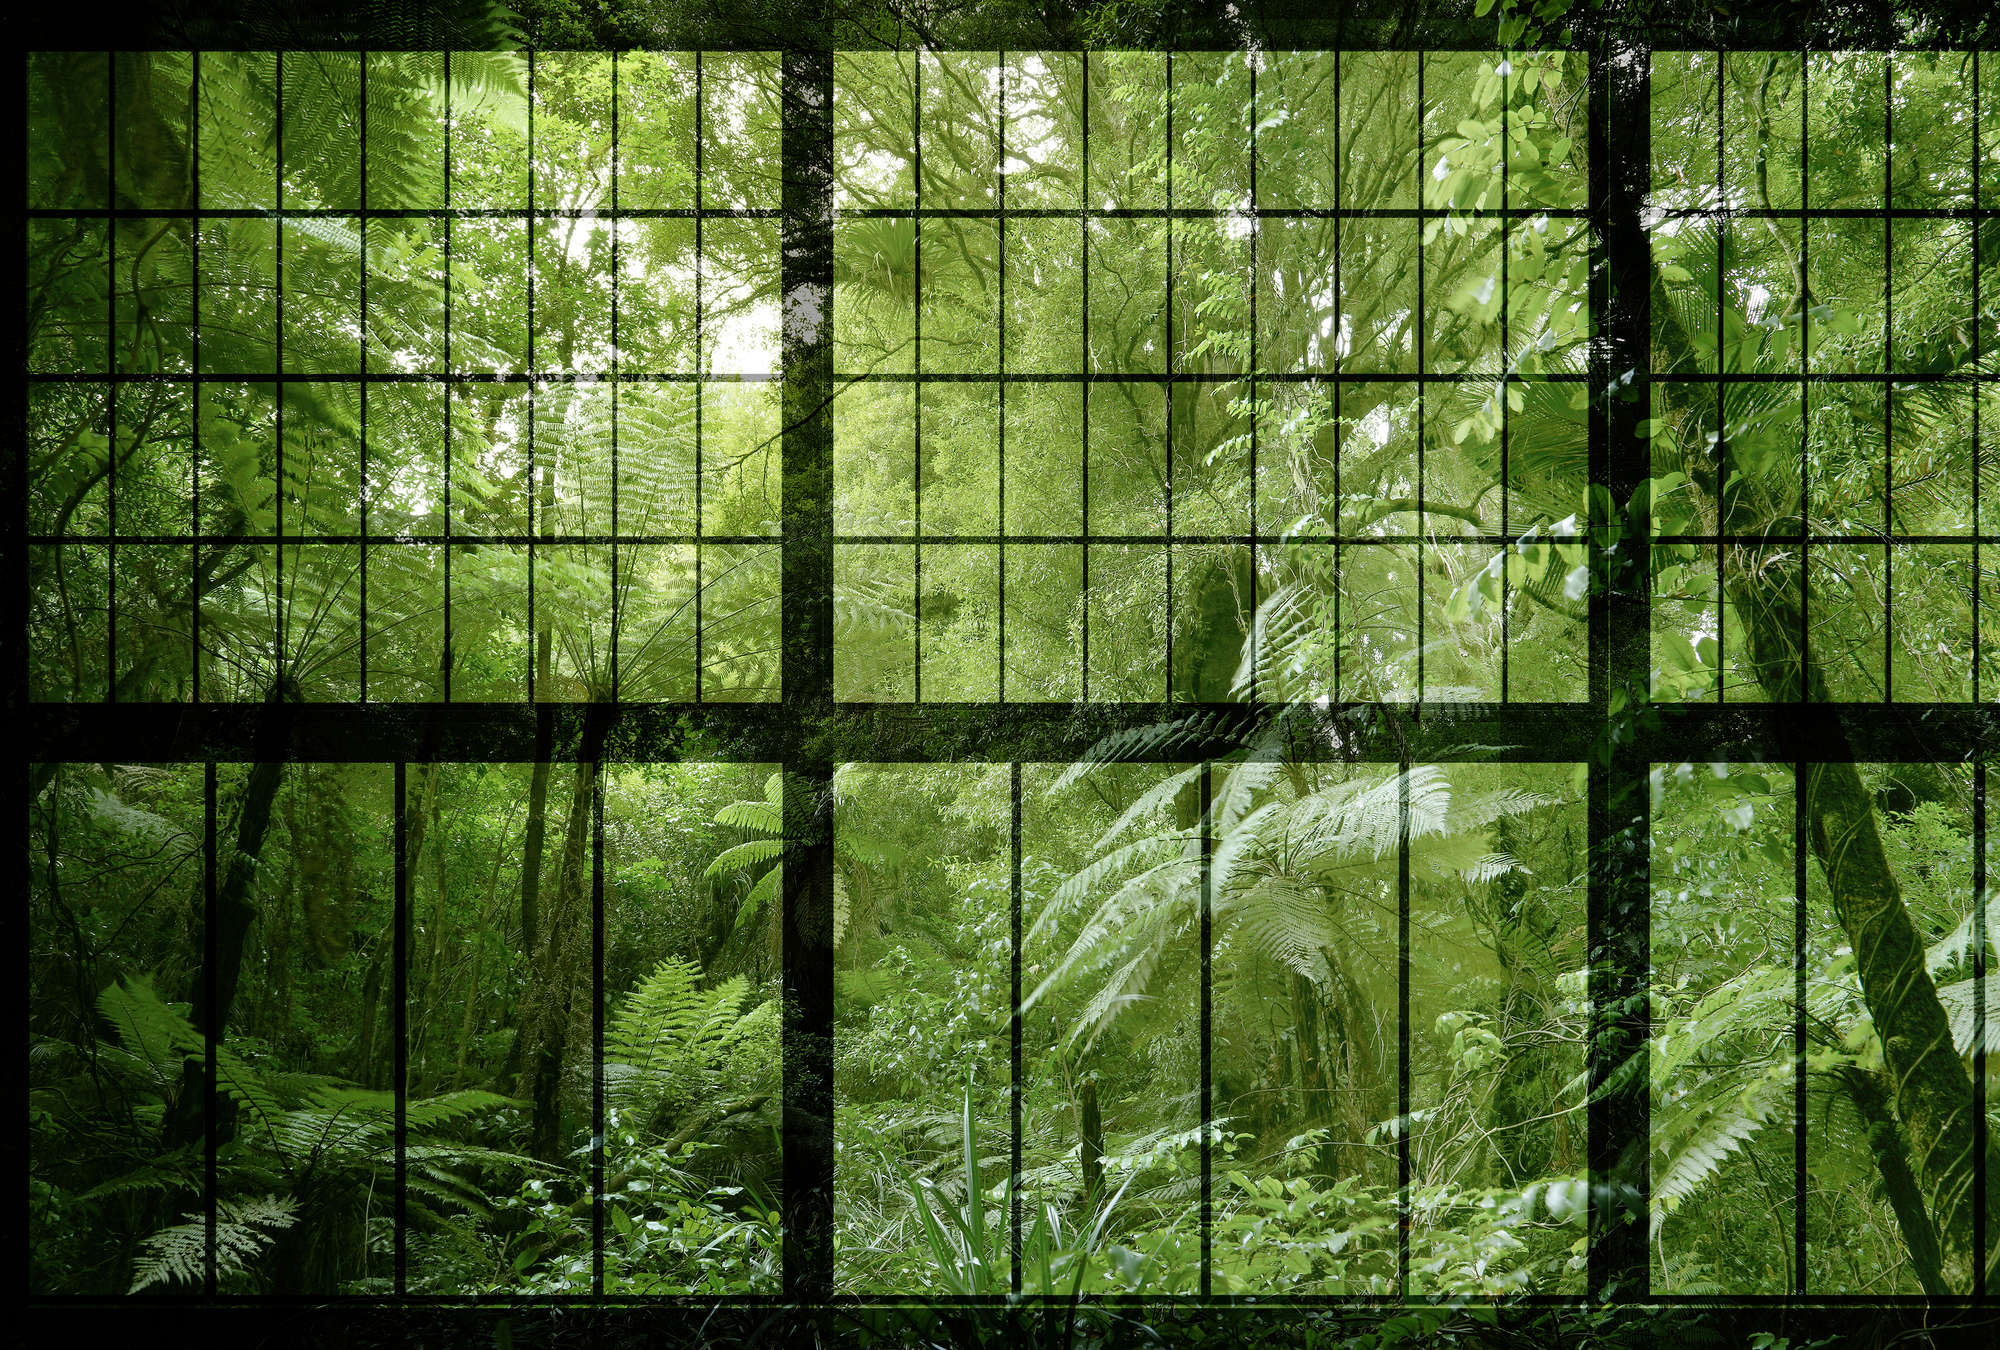             Rainforest 2 - Loft window mural with jungle view - Green, Black | Pearl smooth fleece
        